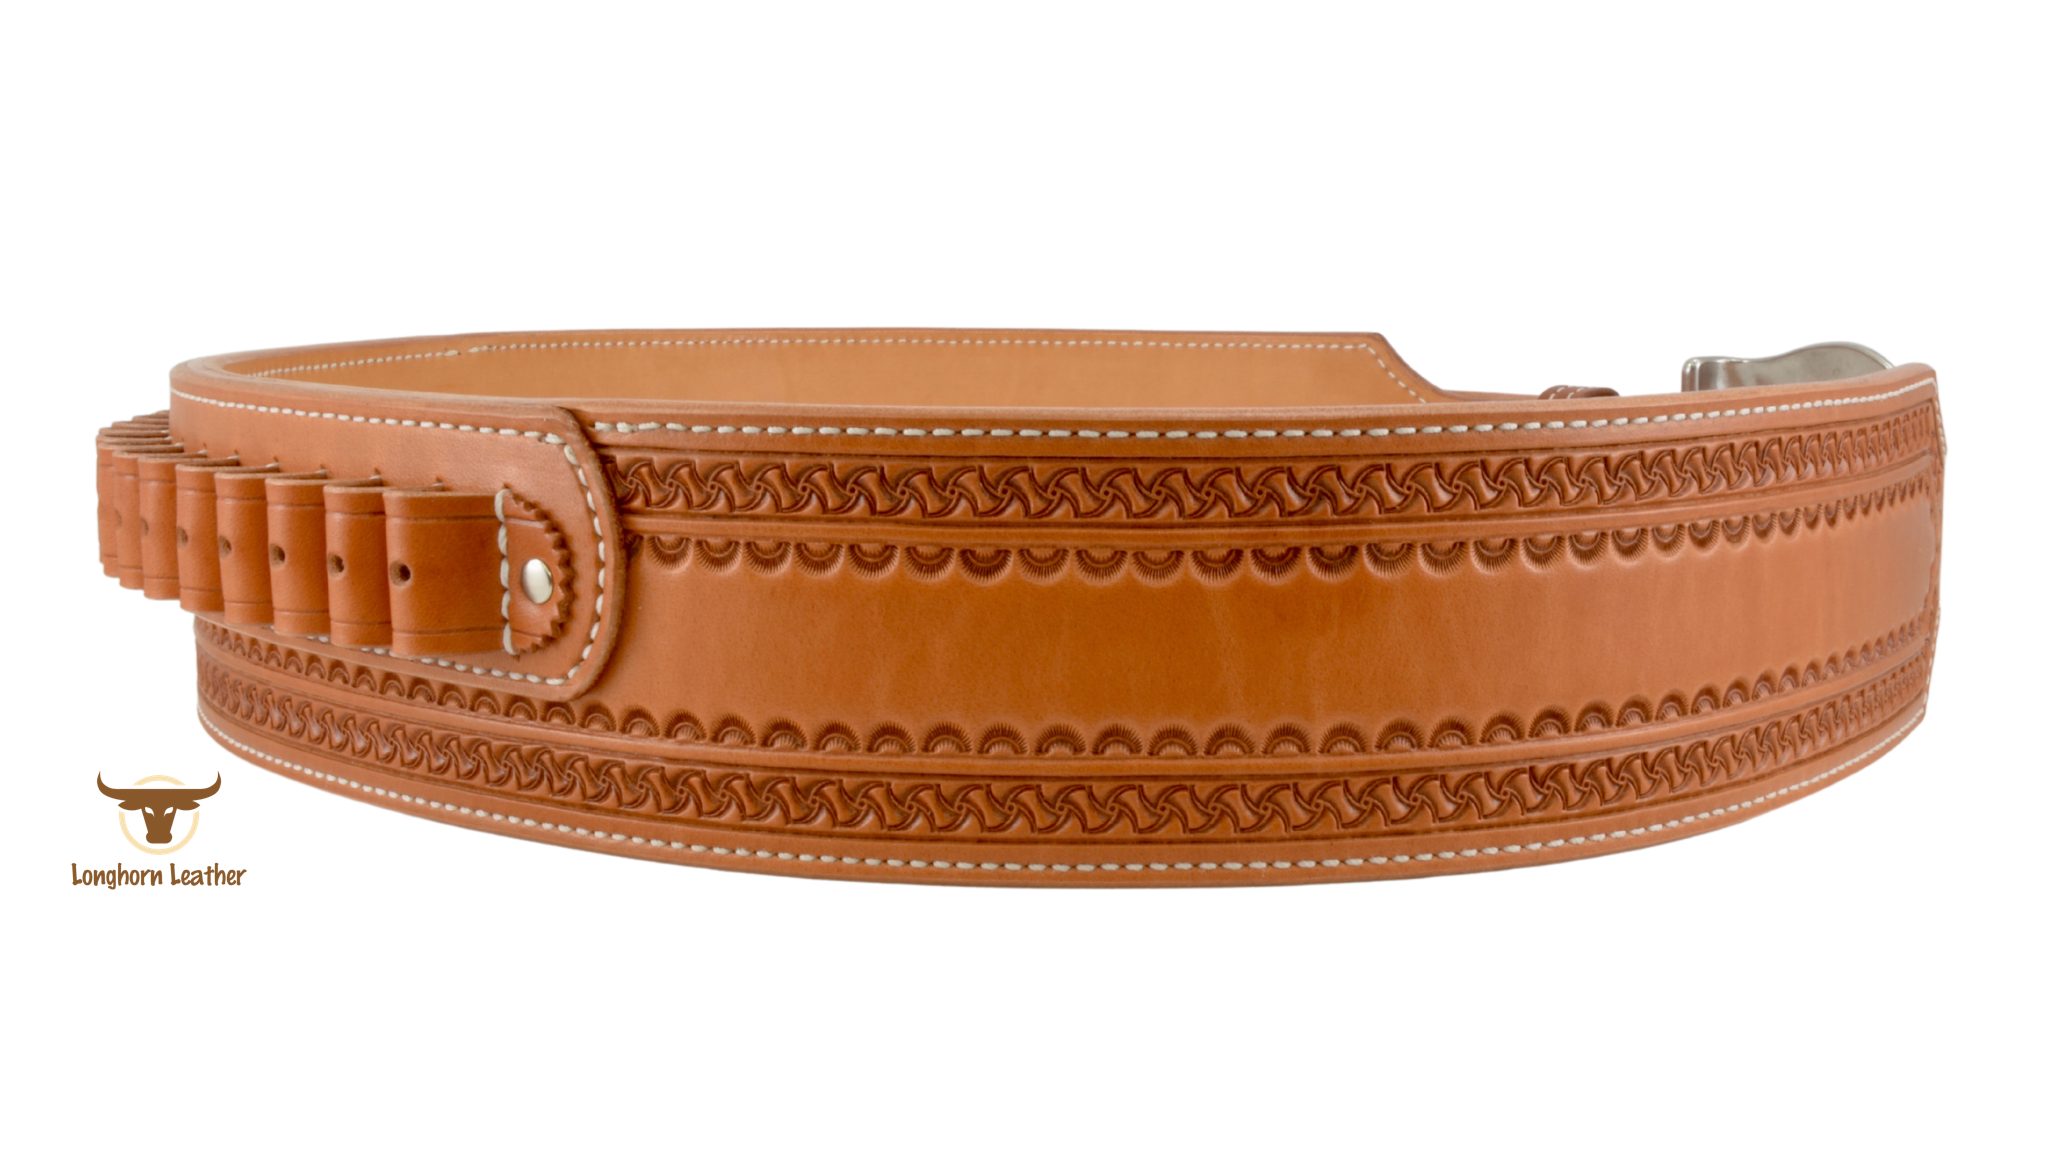 Longhorn Leather AZ-Custom leather cartridge belt featuring the Cimarron  design. Longhorn Leather